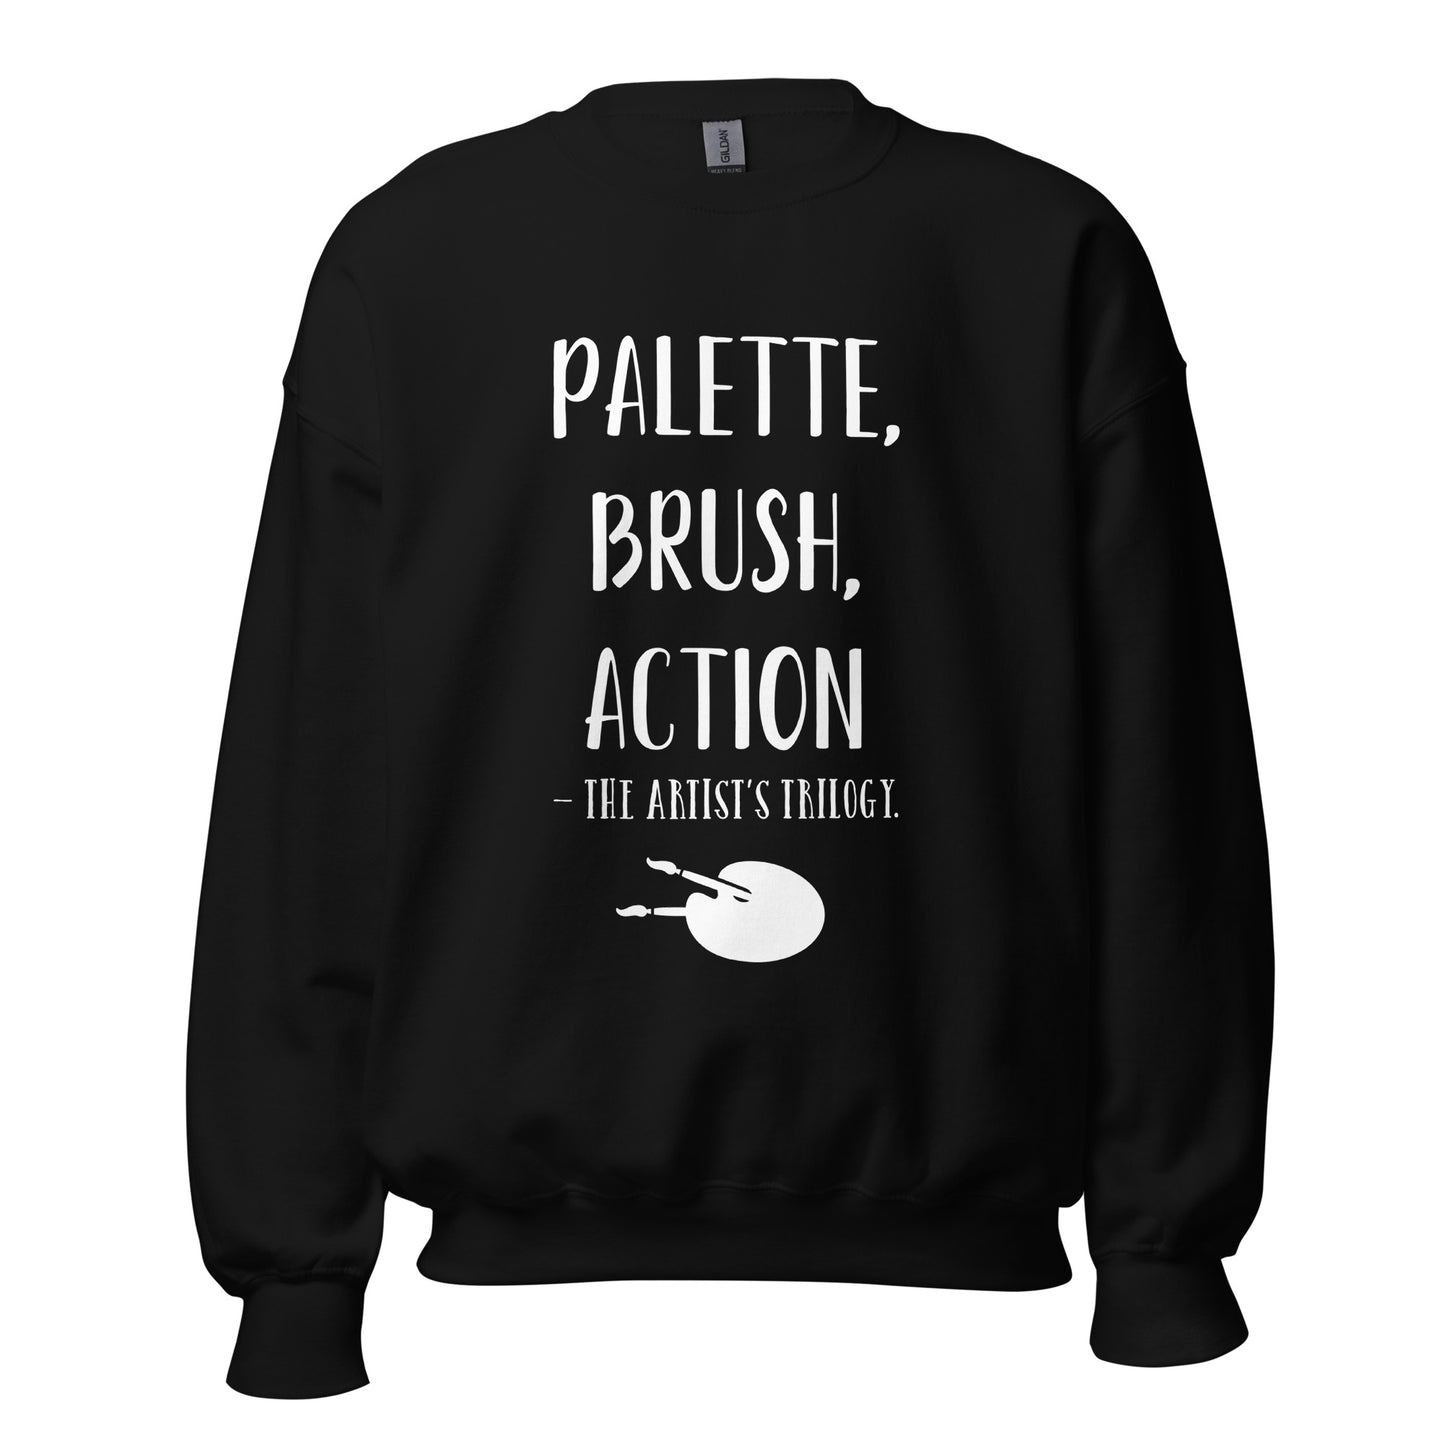 “Palette, brush, action - The artist’s trilogy.” - Unisex Sweatshirt